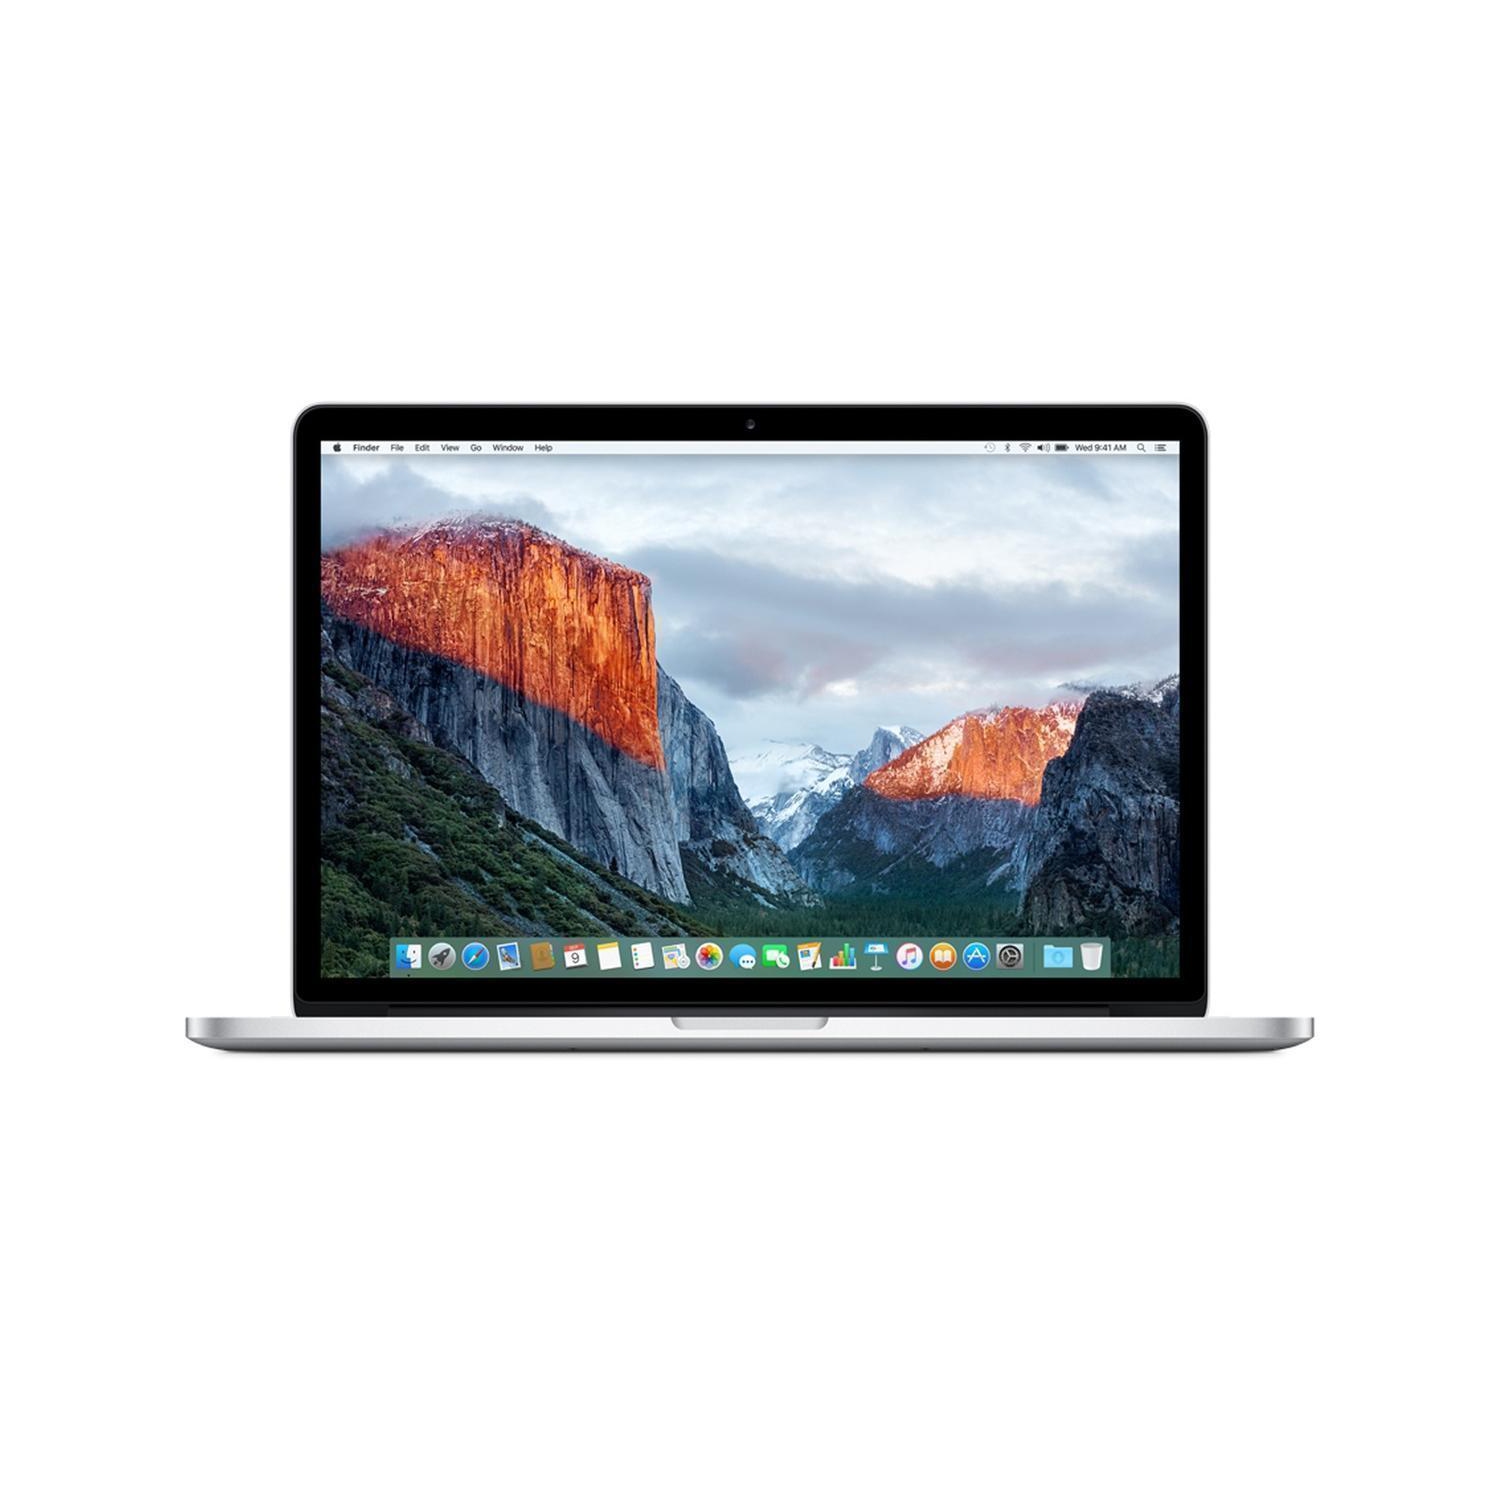 Refurbished (Good) - MacBook Pro Retina 15-inch 2015, Intel Core 